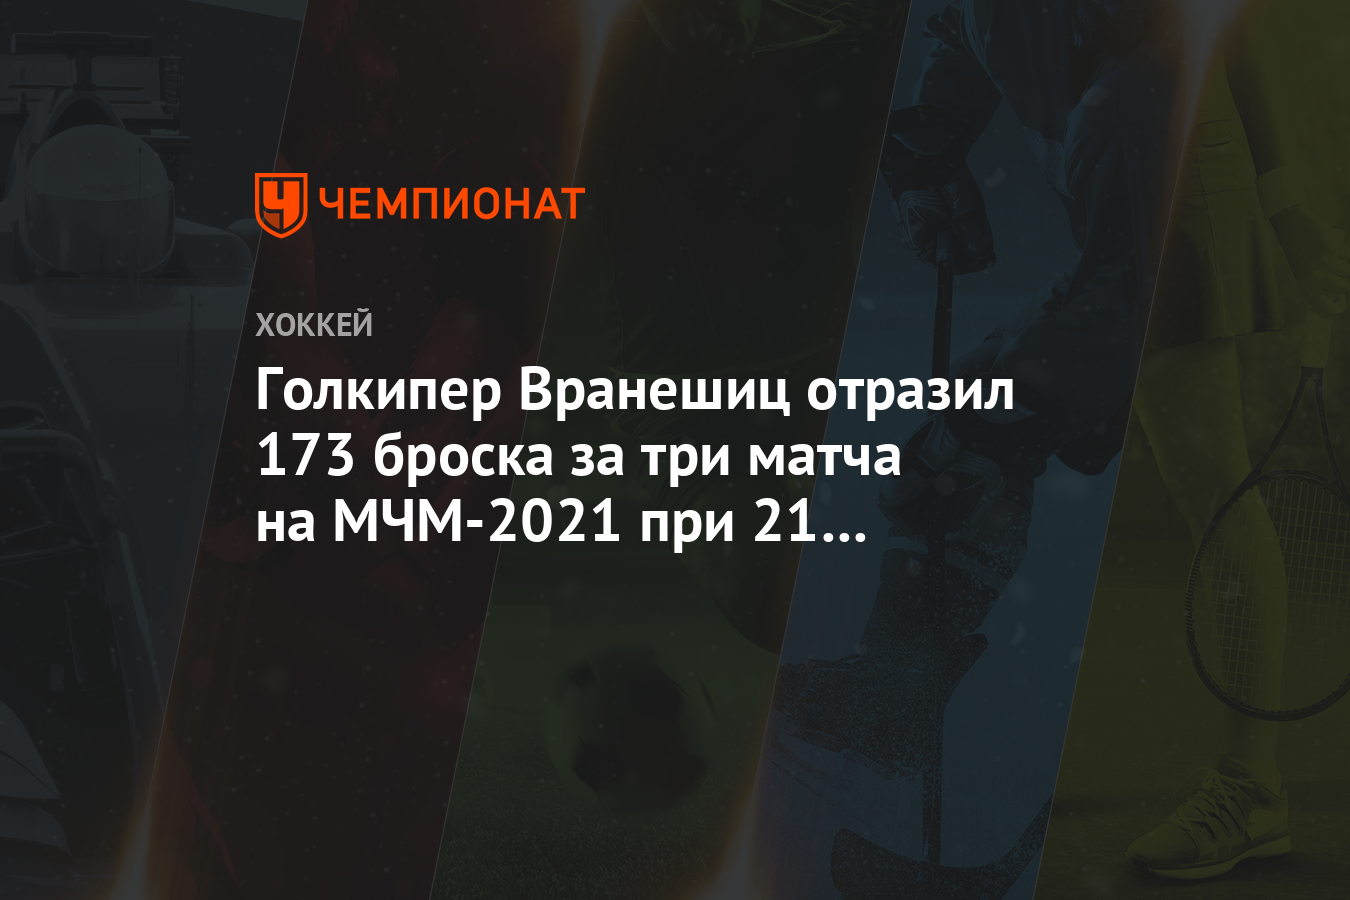 Голкипер Вранешиц отразил 173 броска за три матча на МЧМ-2021 при 21 пропущенной шайбы